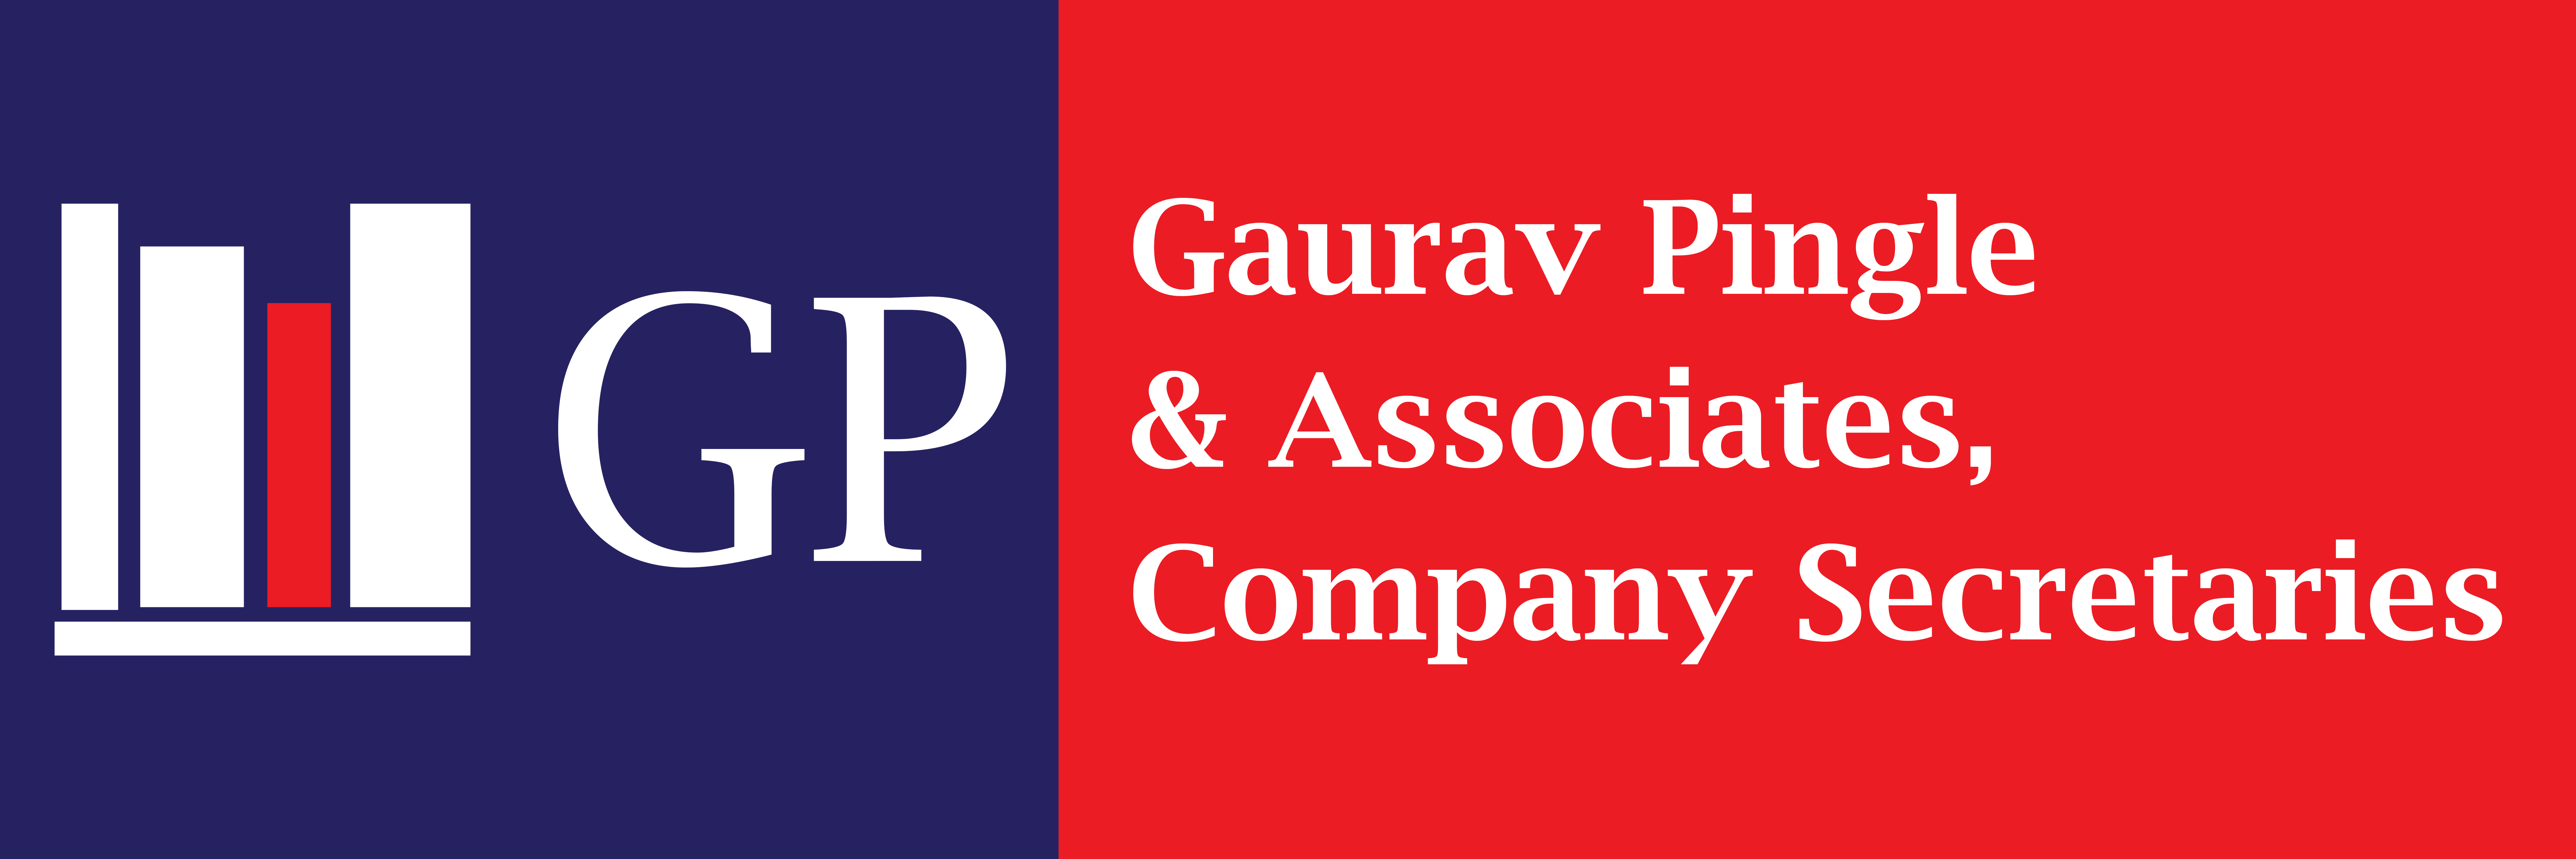 Gaurav Pingle & Associates, Company Secretaries